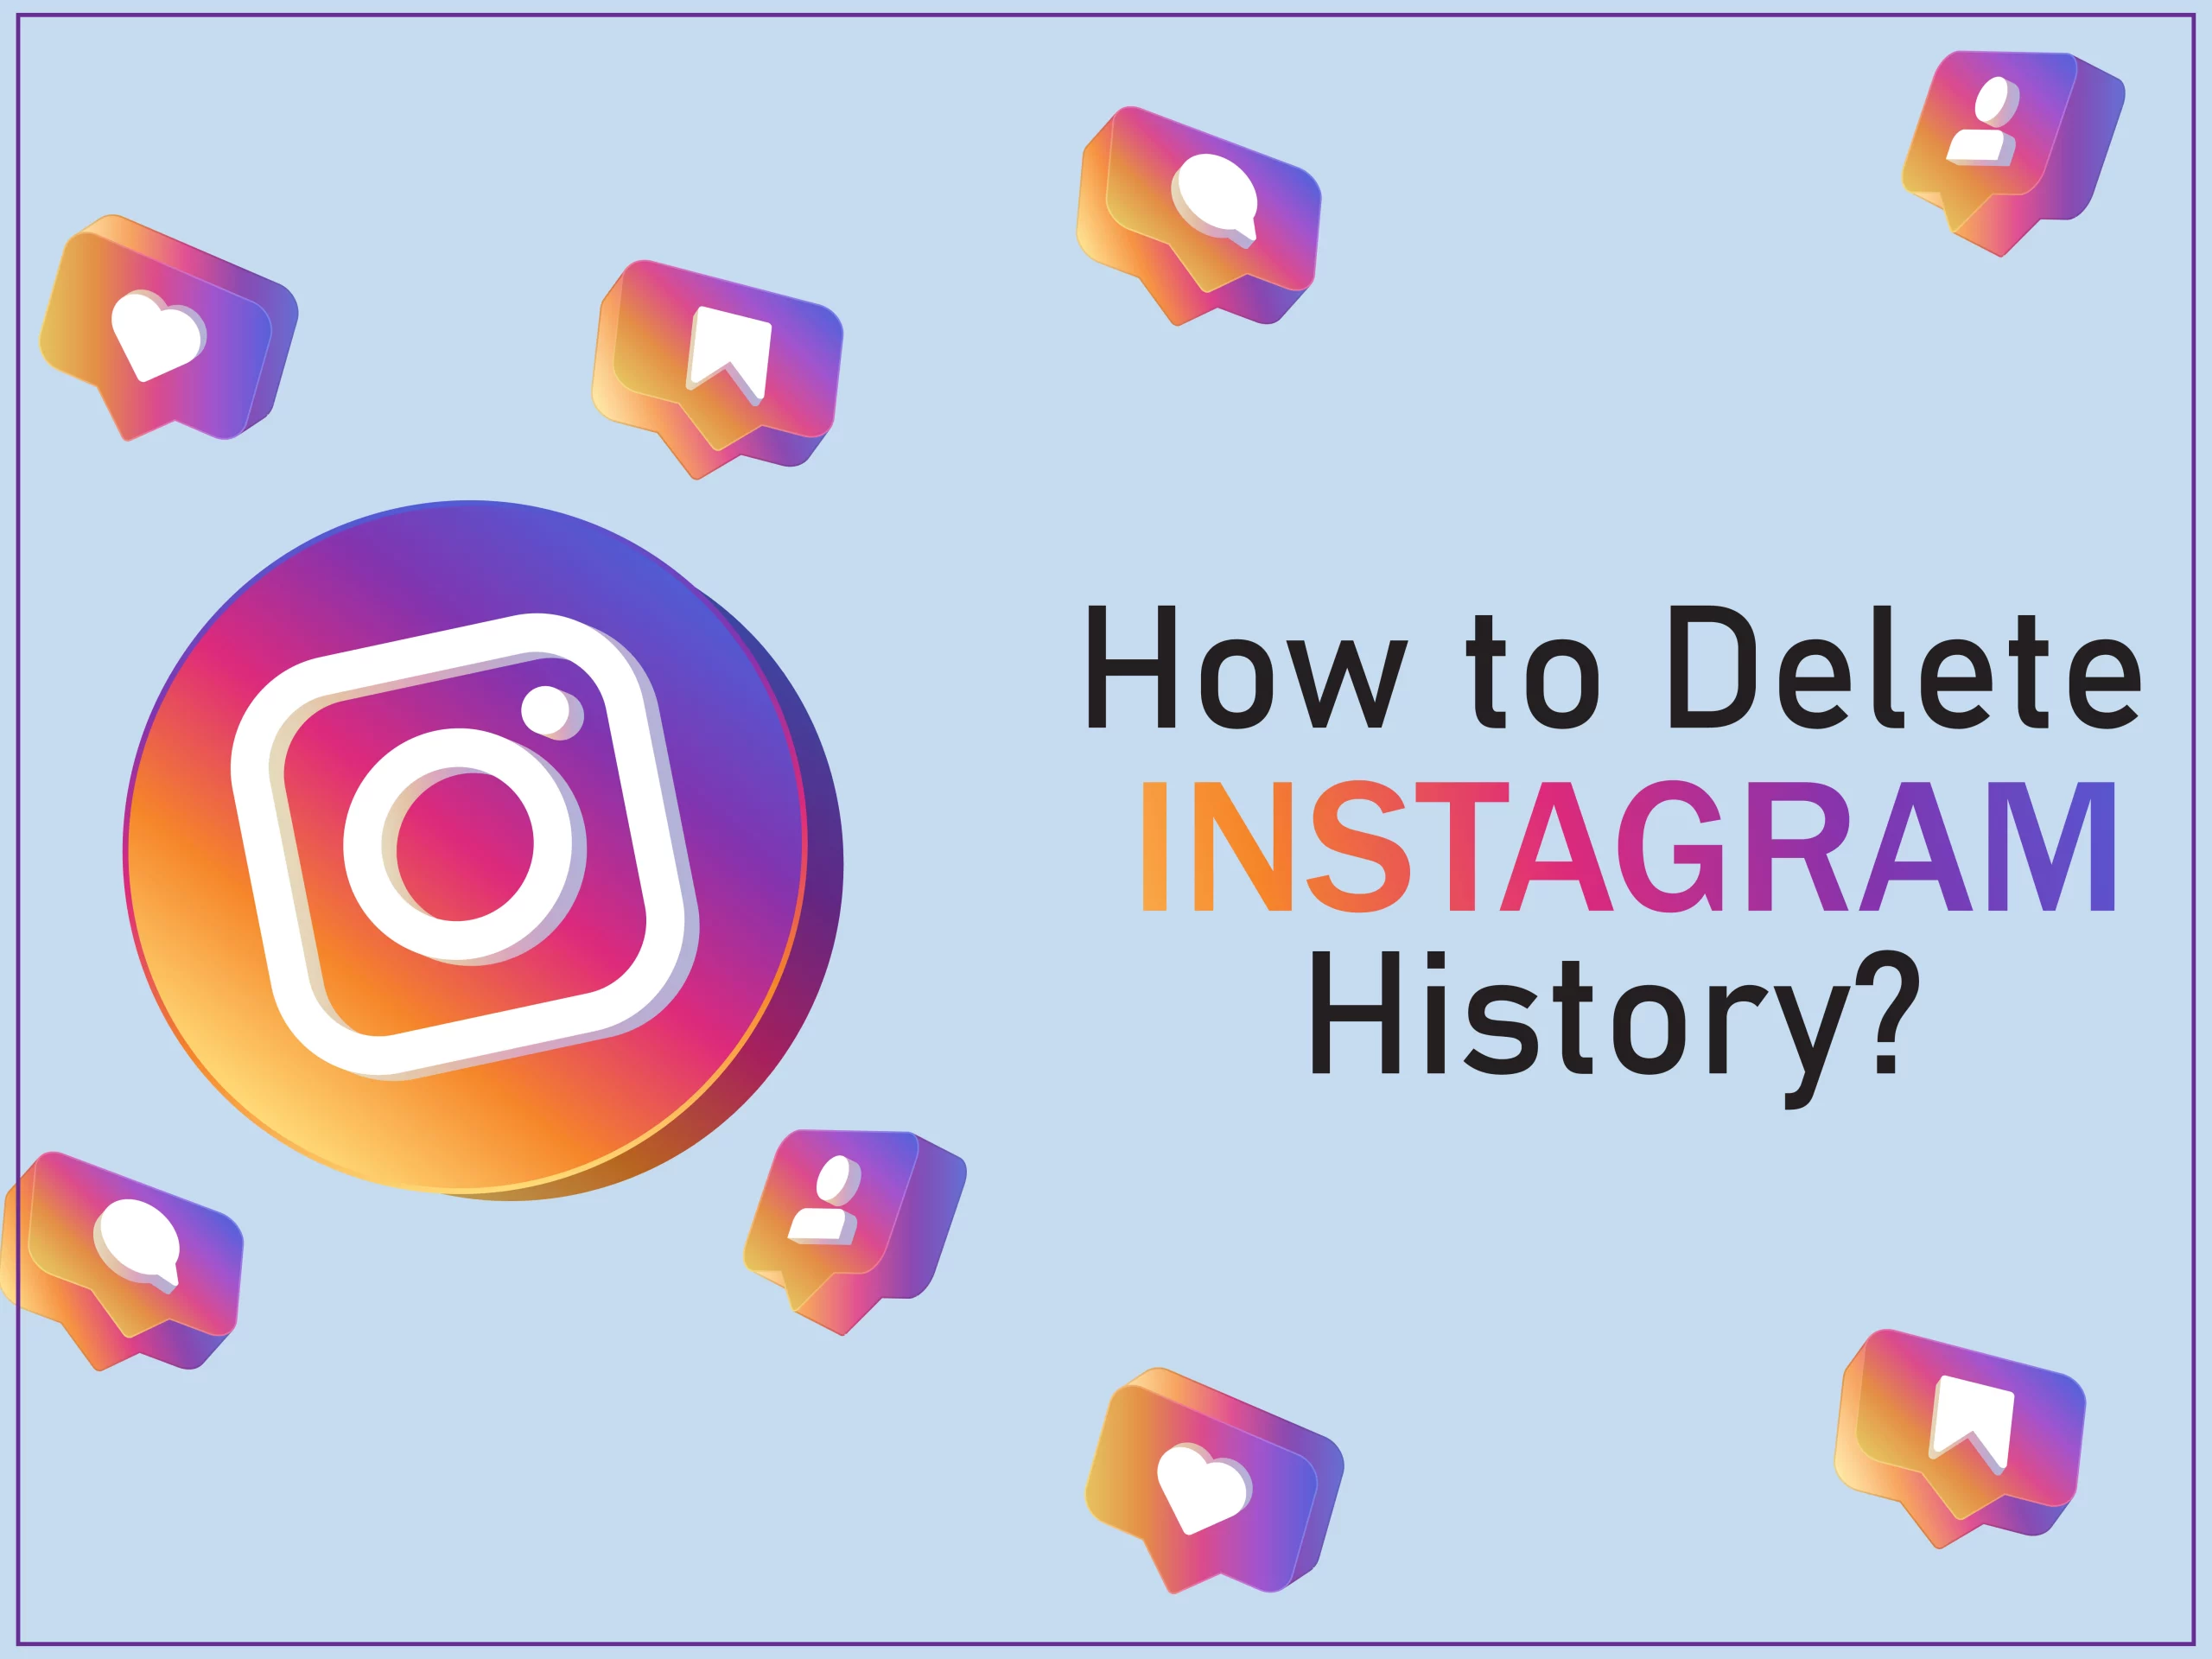 How to delete Instagram History?